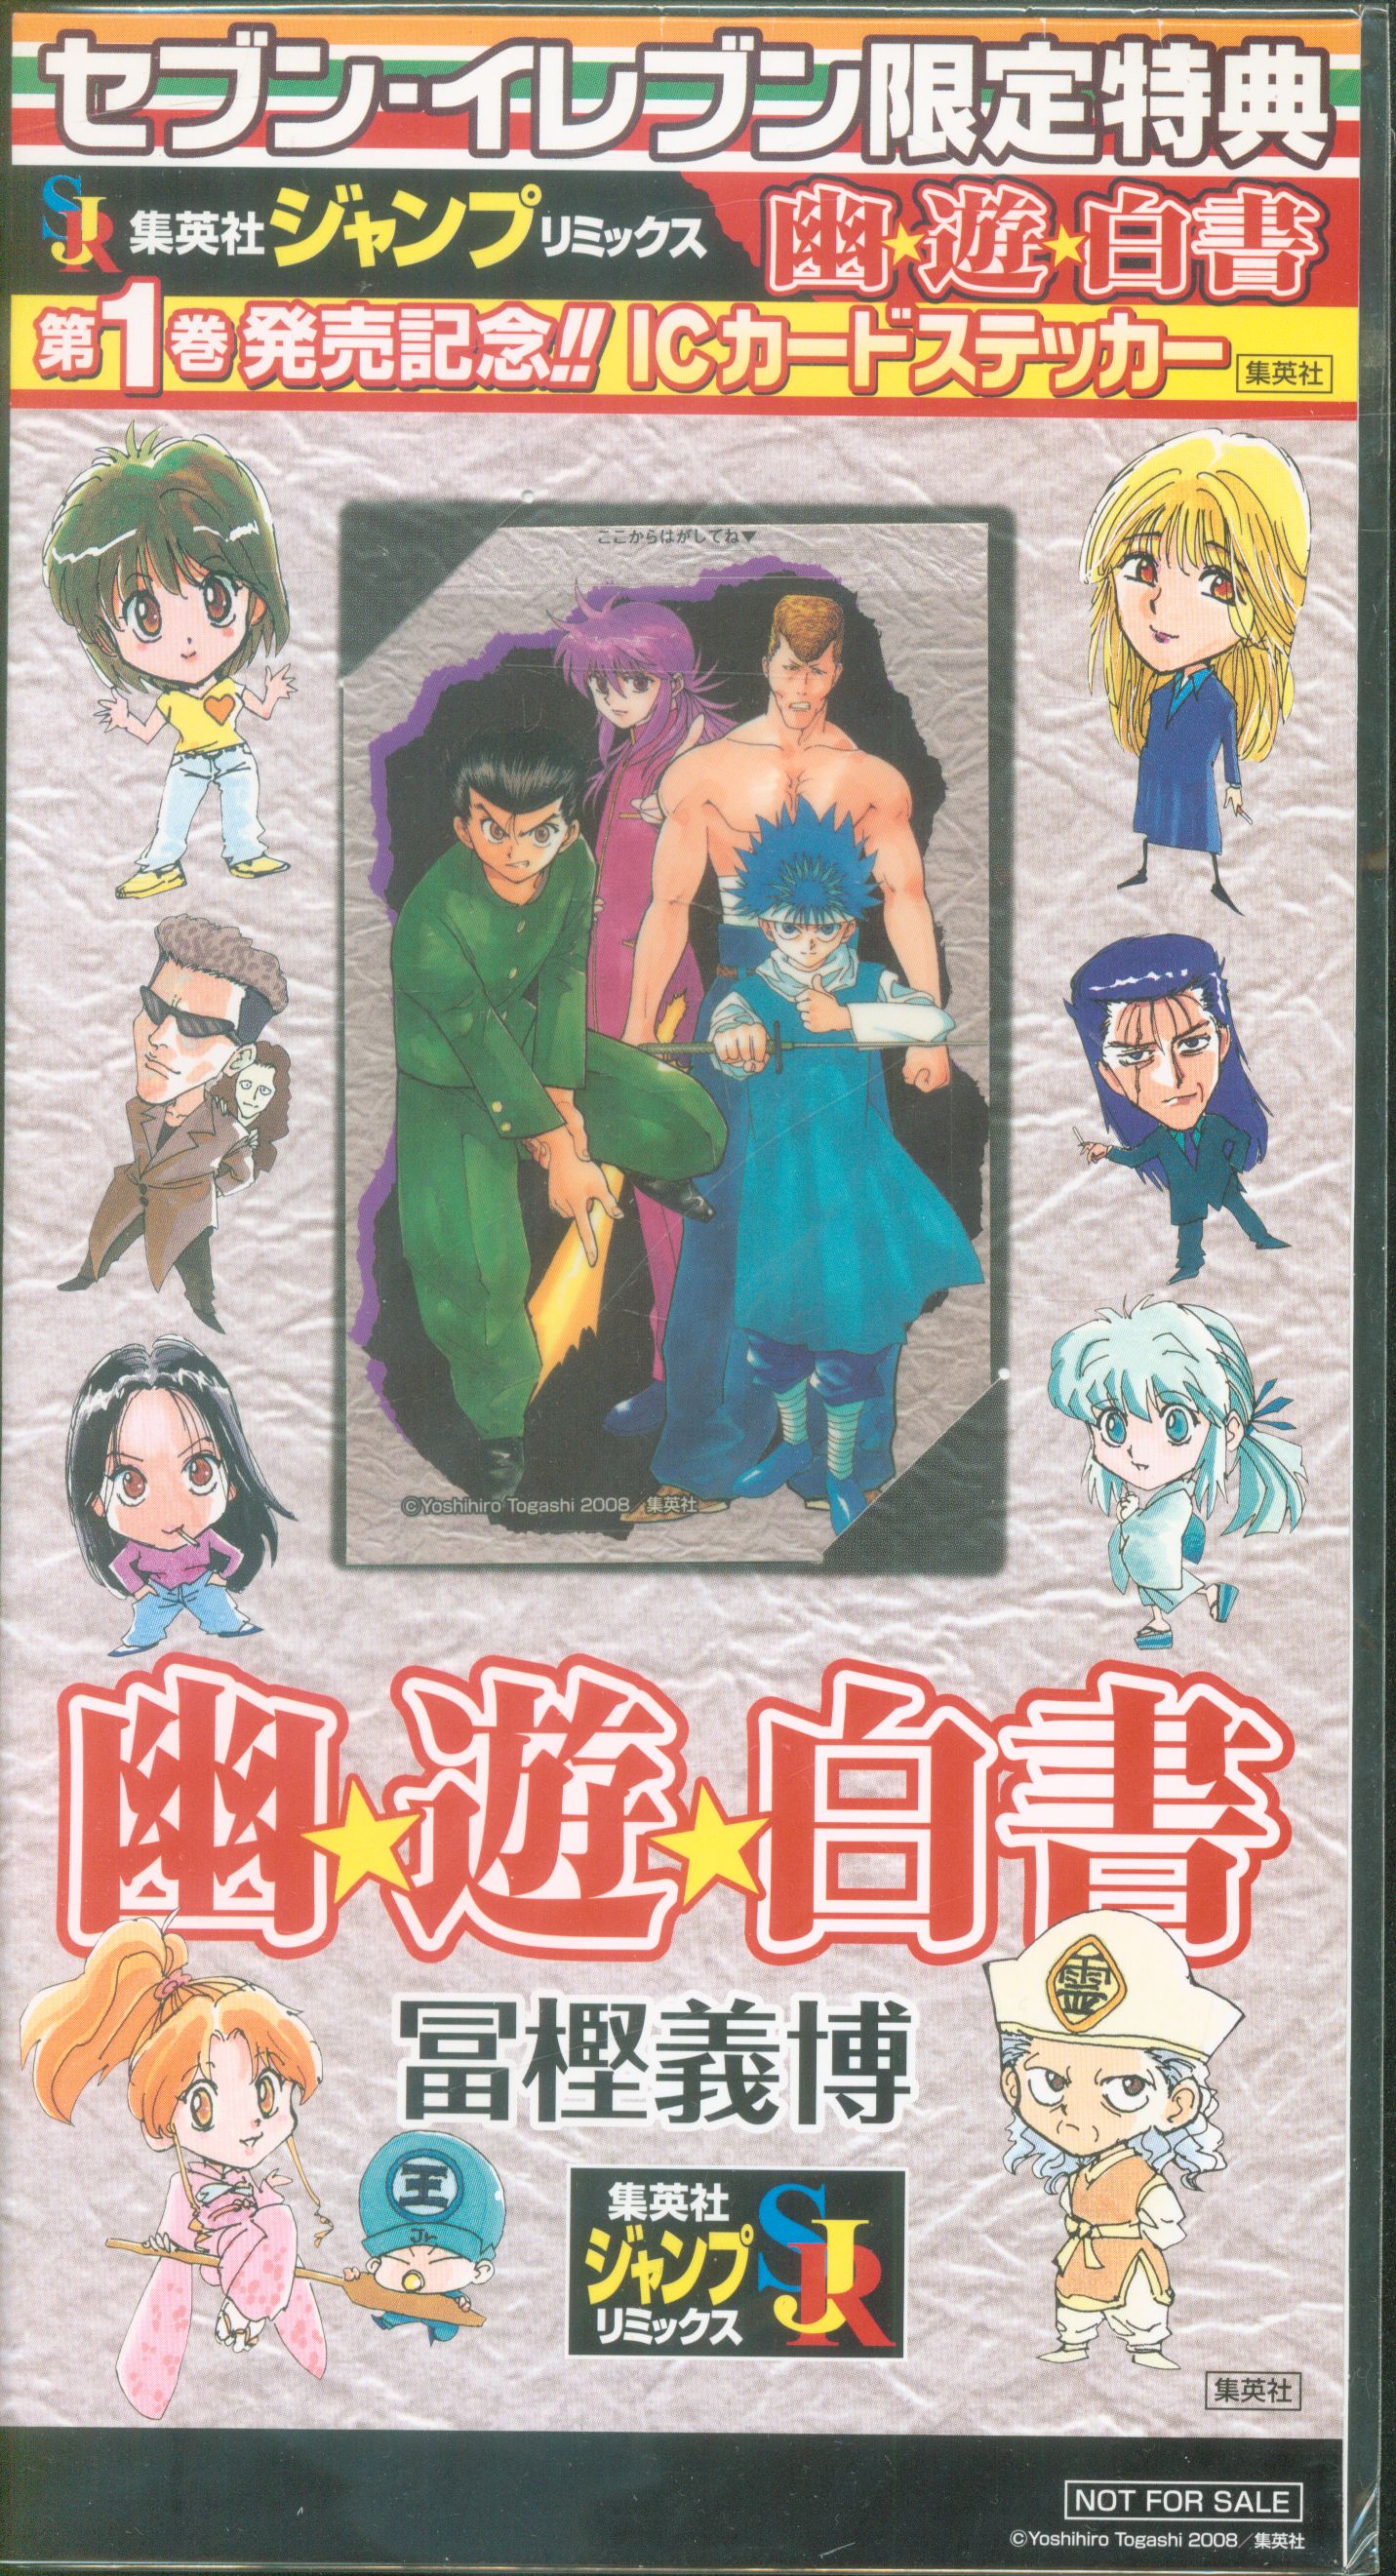 7 11 Limited Bonus Item Shueisha Jump Remix Yu Yu Hakusho First Volume Launch Ic Card Sticker Mandarake Online Shop